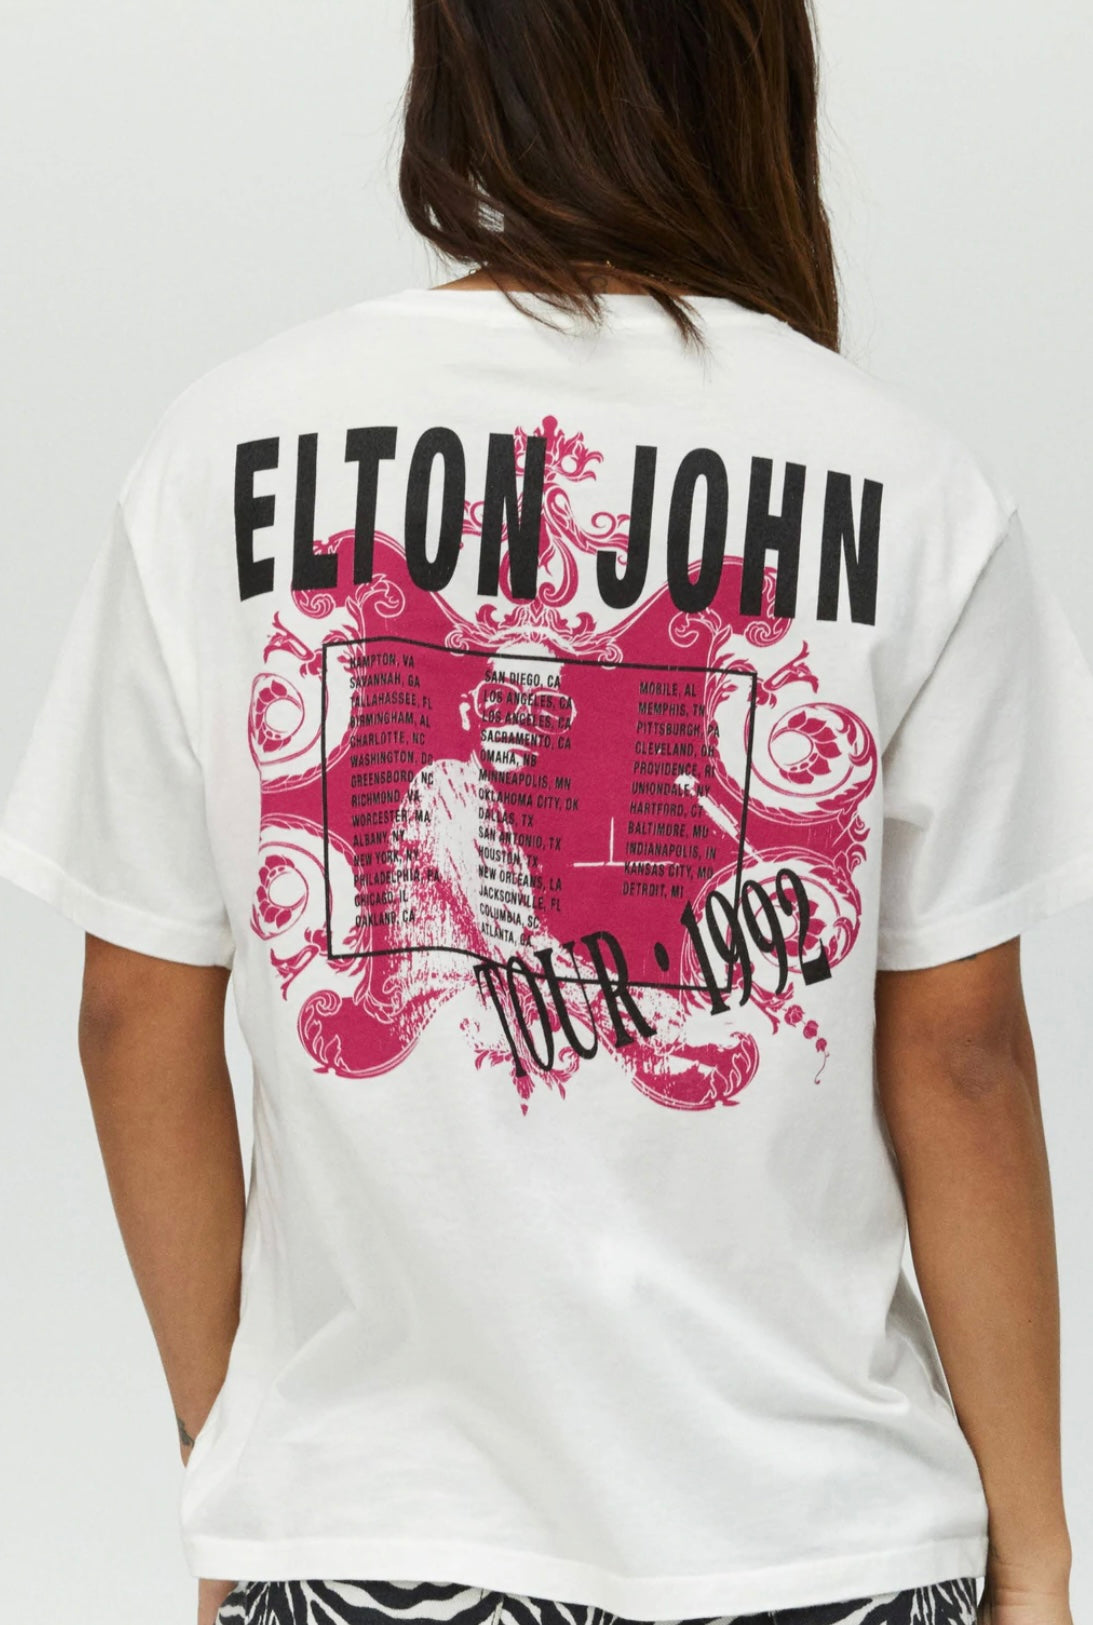 Elton John Live in Concert '92 Boyfriend Tee